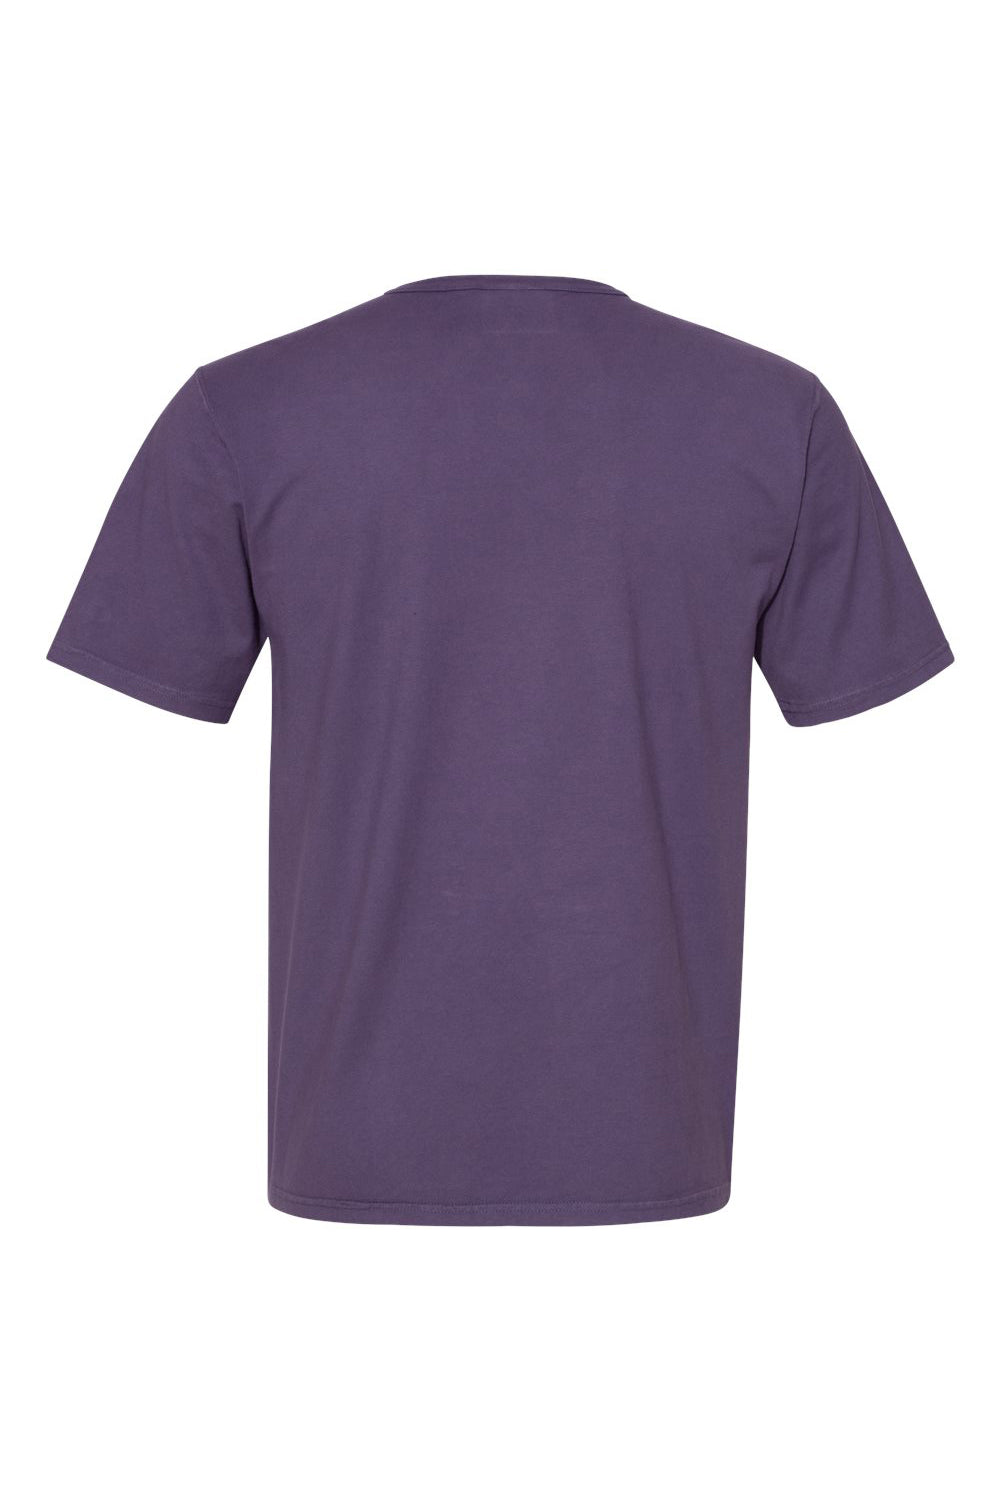 Champion CD100 Mens Garment Dyed Short Sleeve Crewneck T-Shirt Grape Soda Purple Flat Back